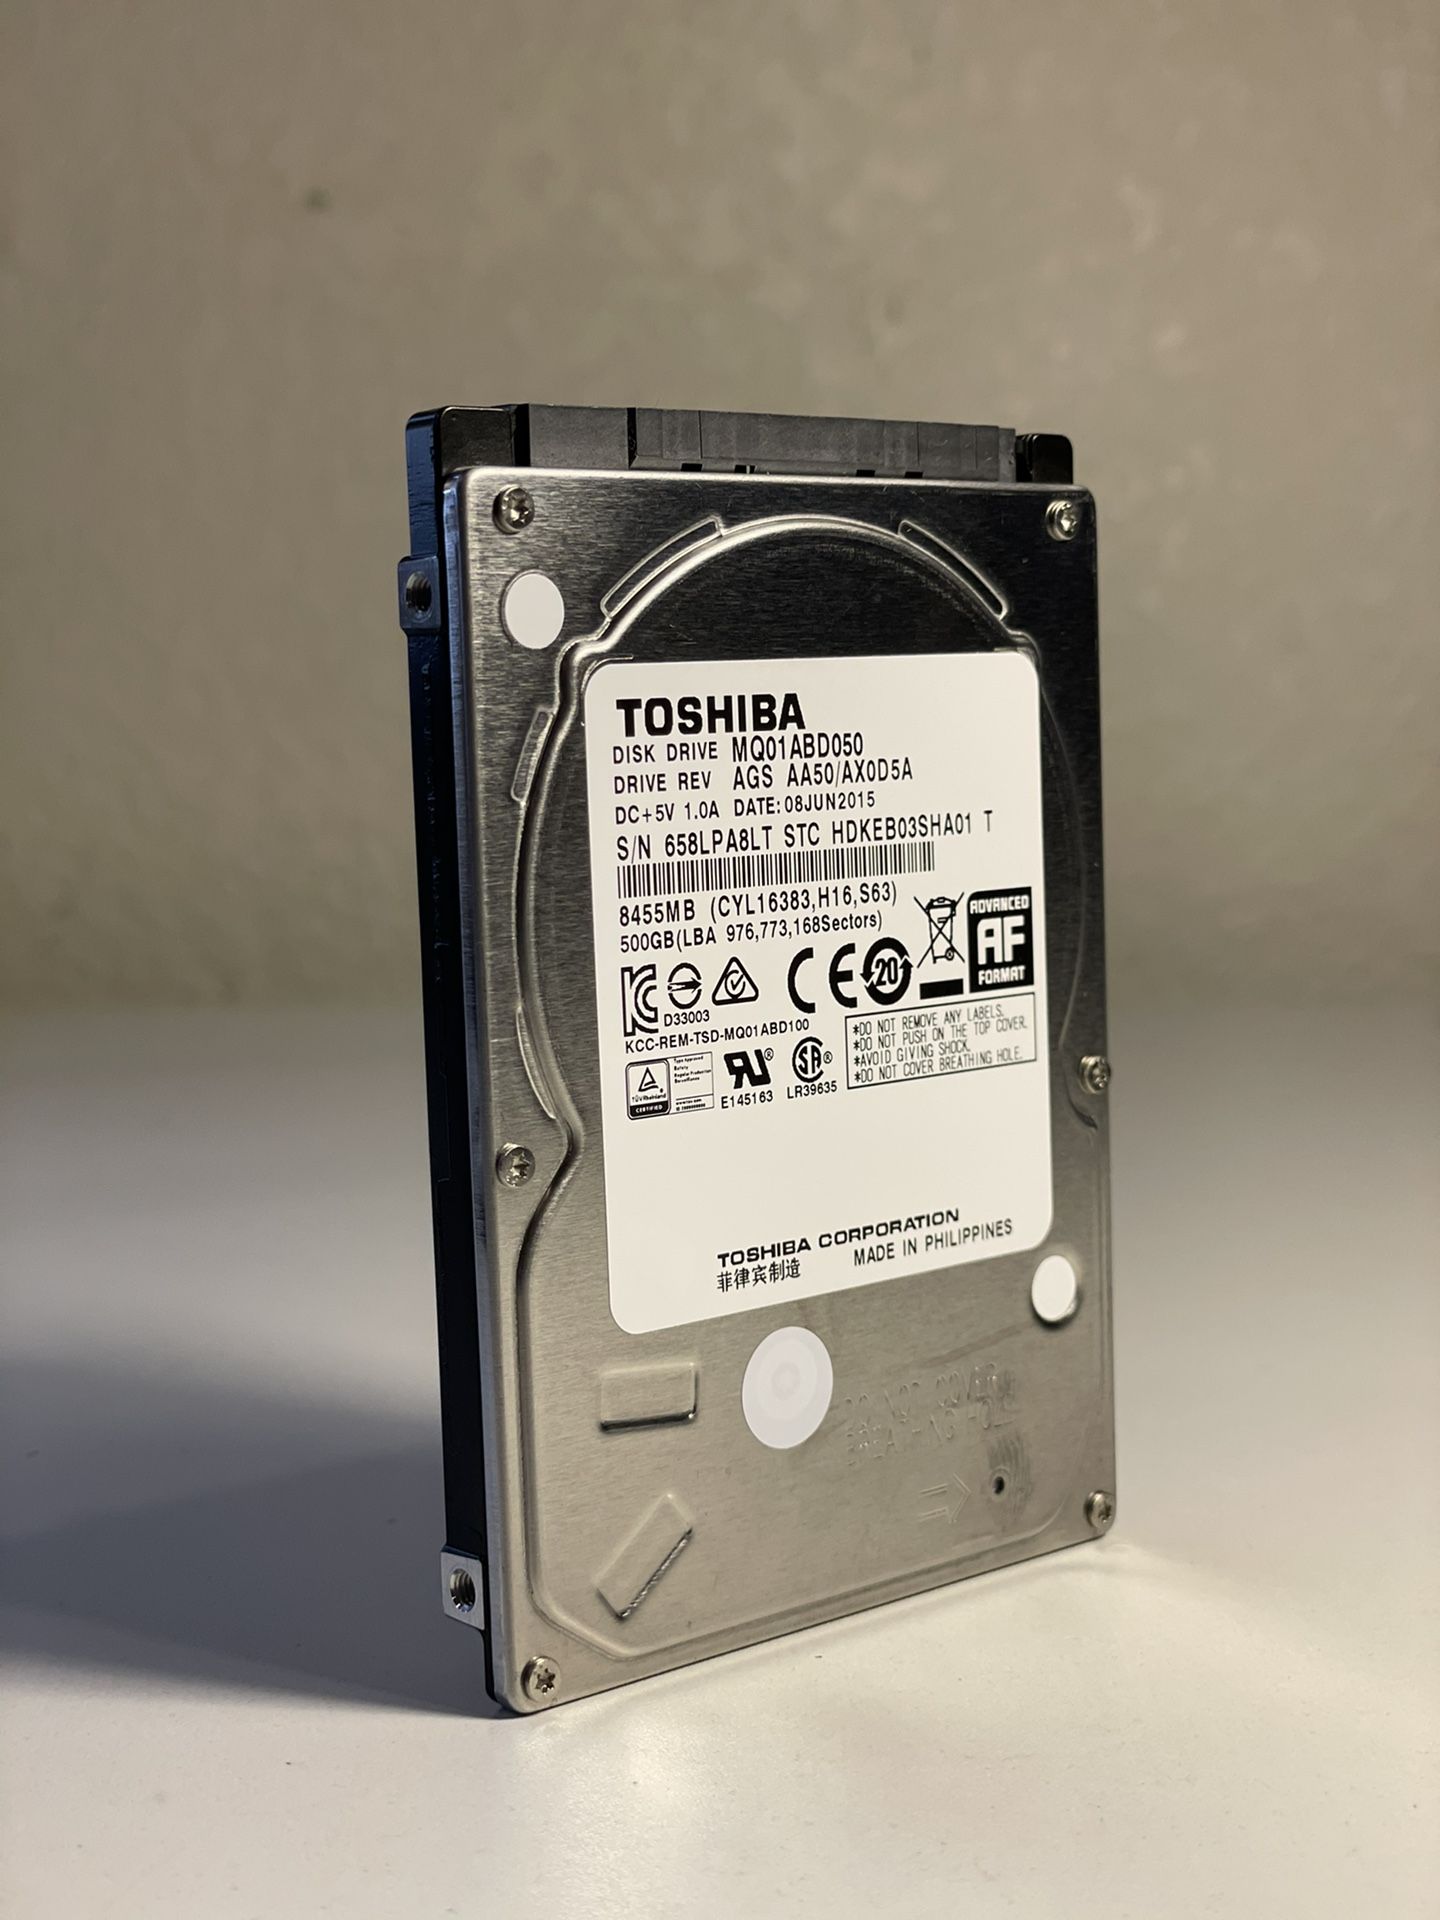 Toshiba 500GB Hard Drive Laptop MacBook Playstation PC $10